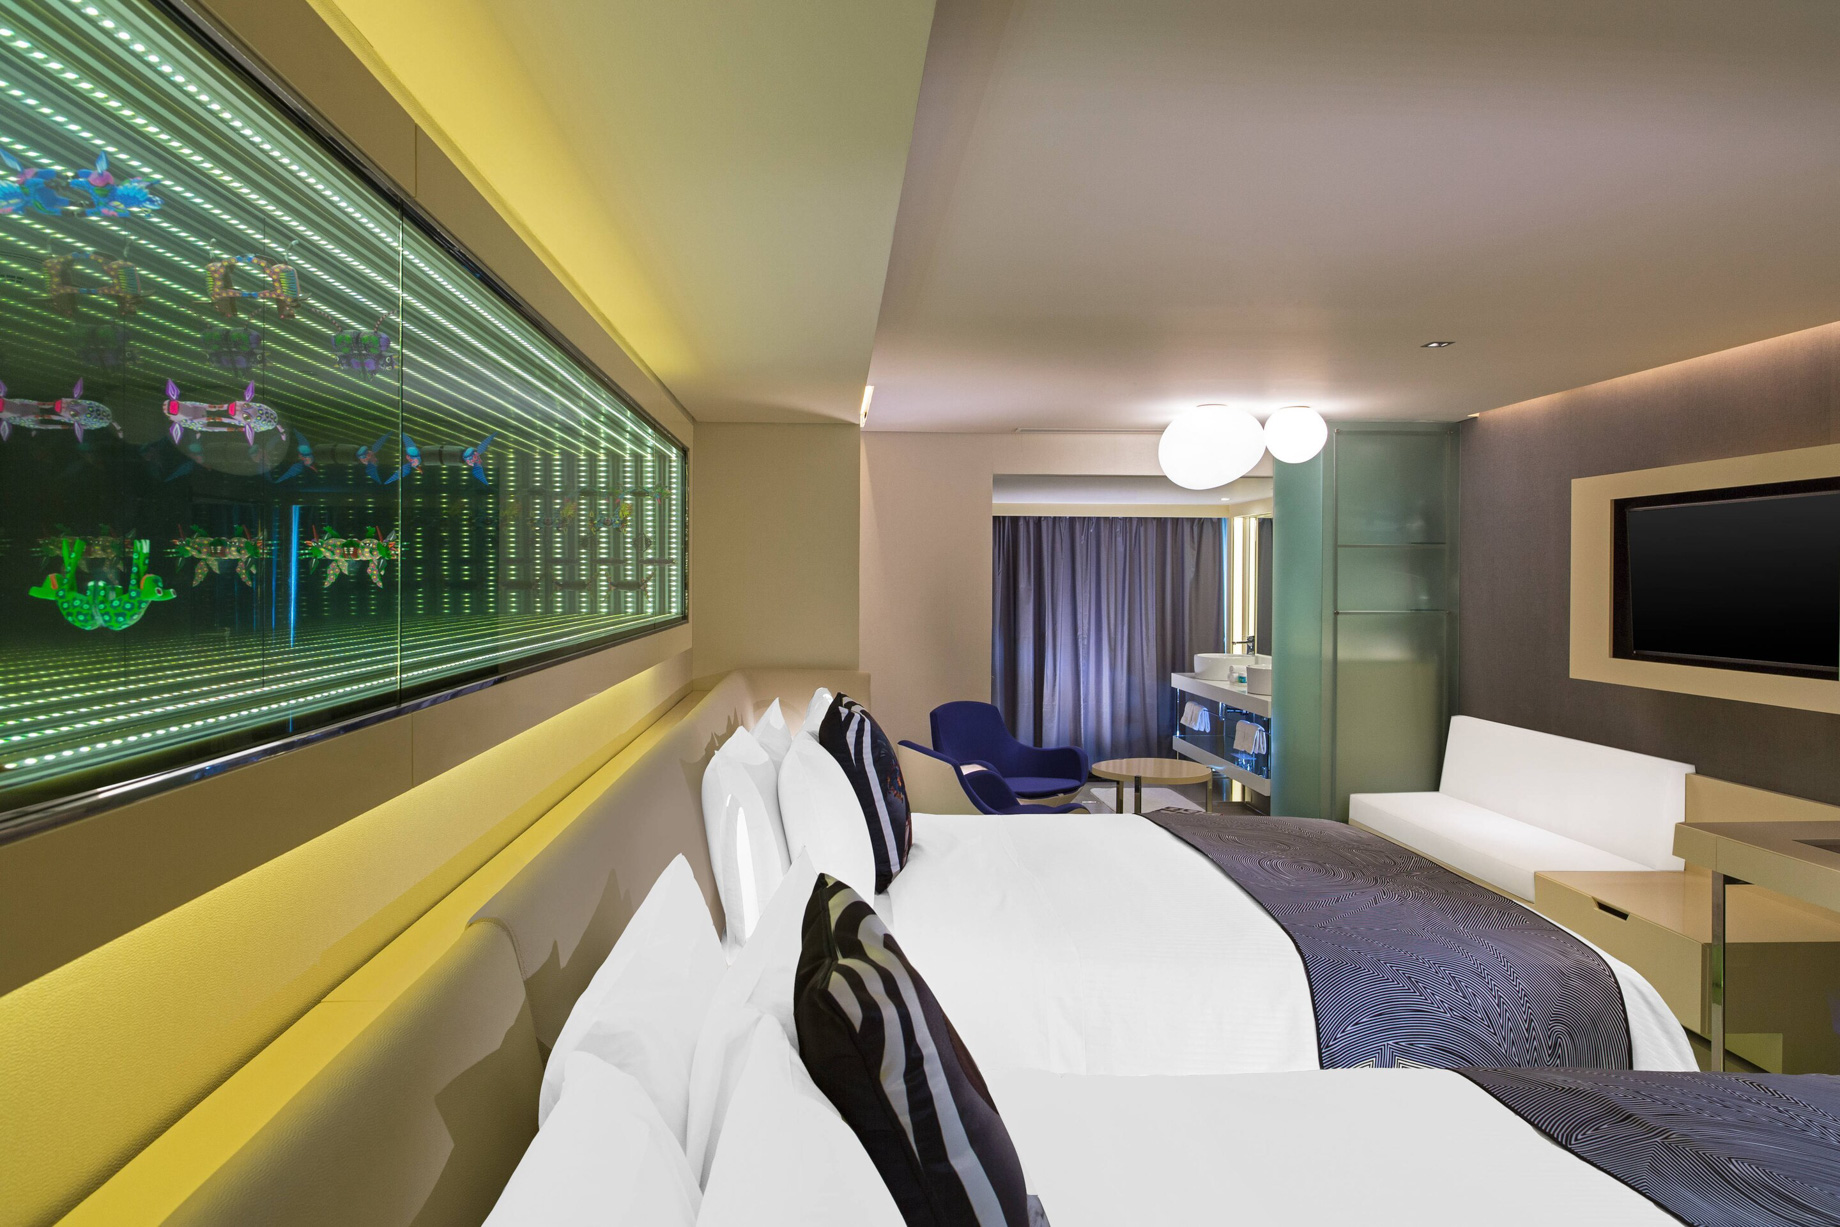 W Mexico City Hotel – Polanco, Mexico City, Mexico – Wonderful Room Beds